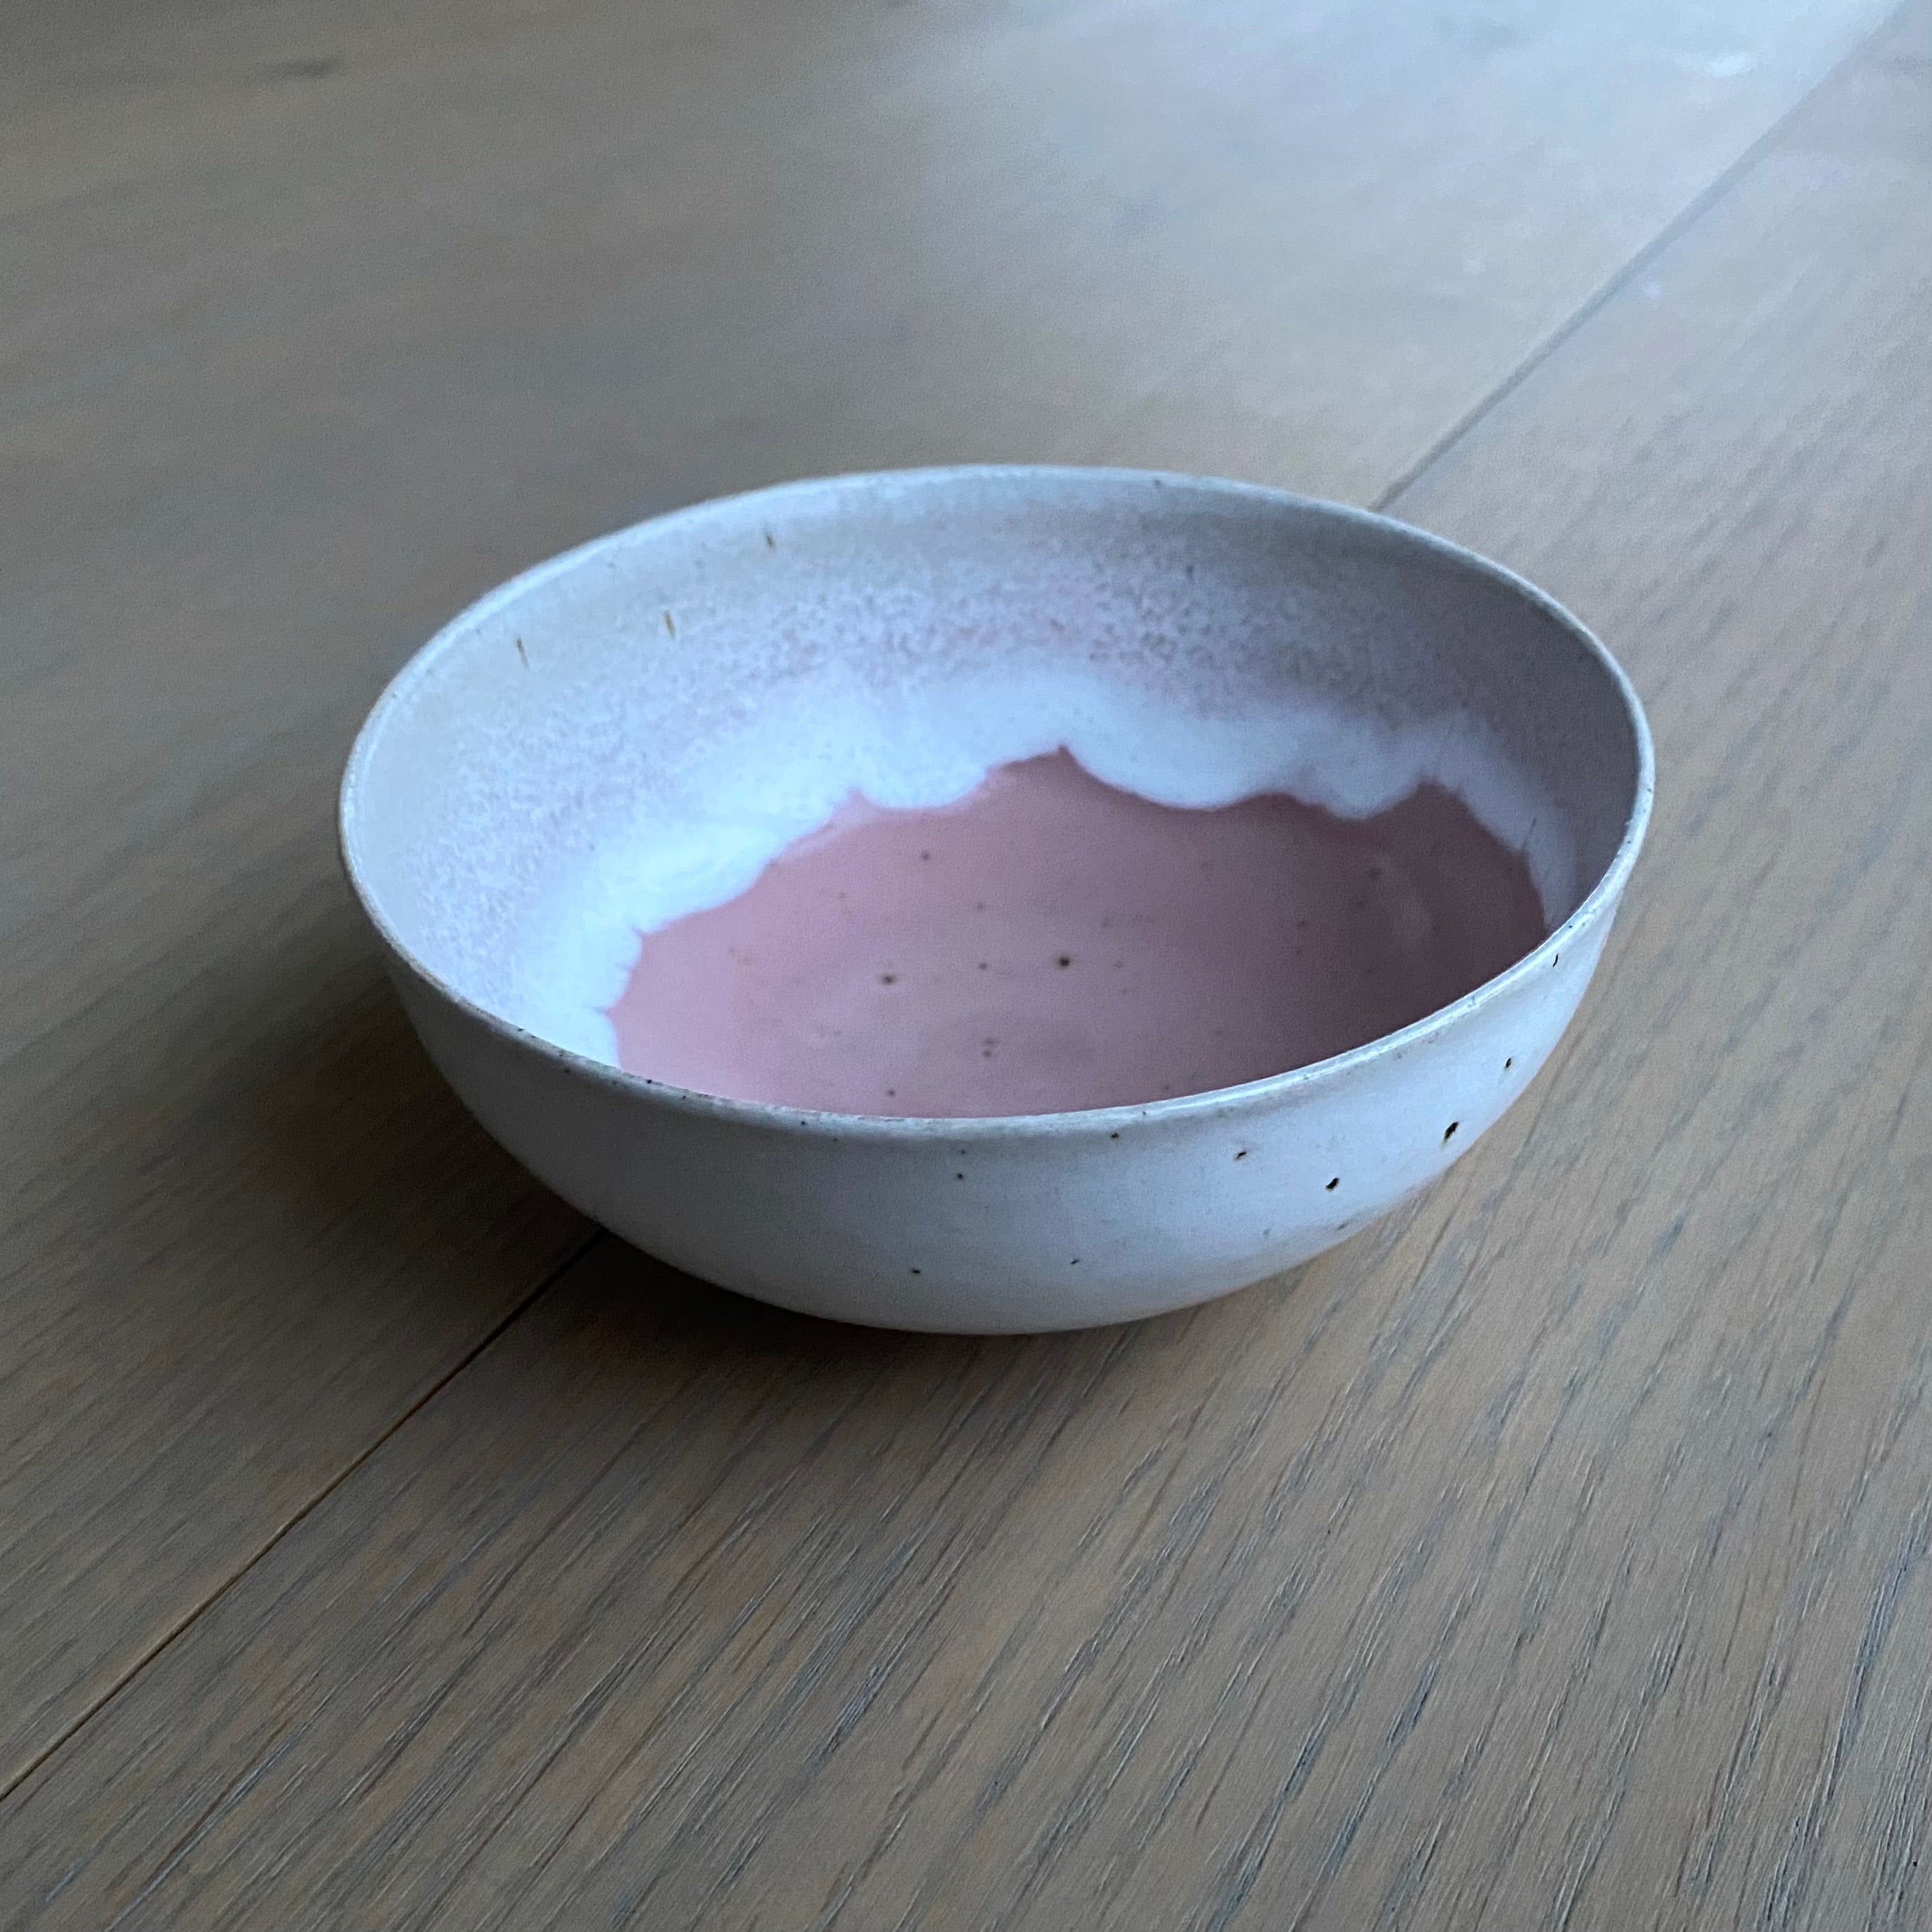 Tasja P lille morgenmadsskål - off white og lyserød